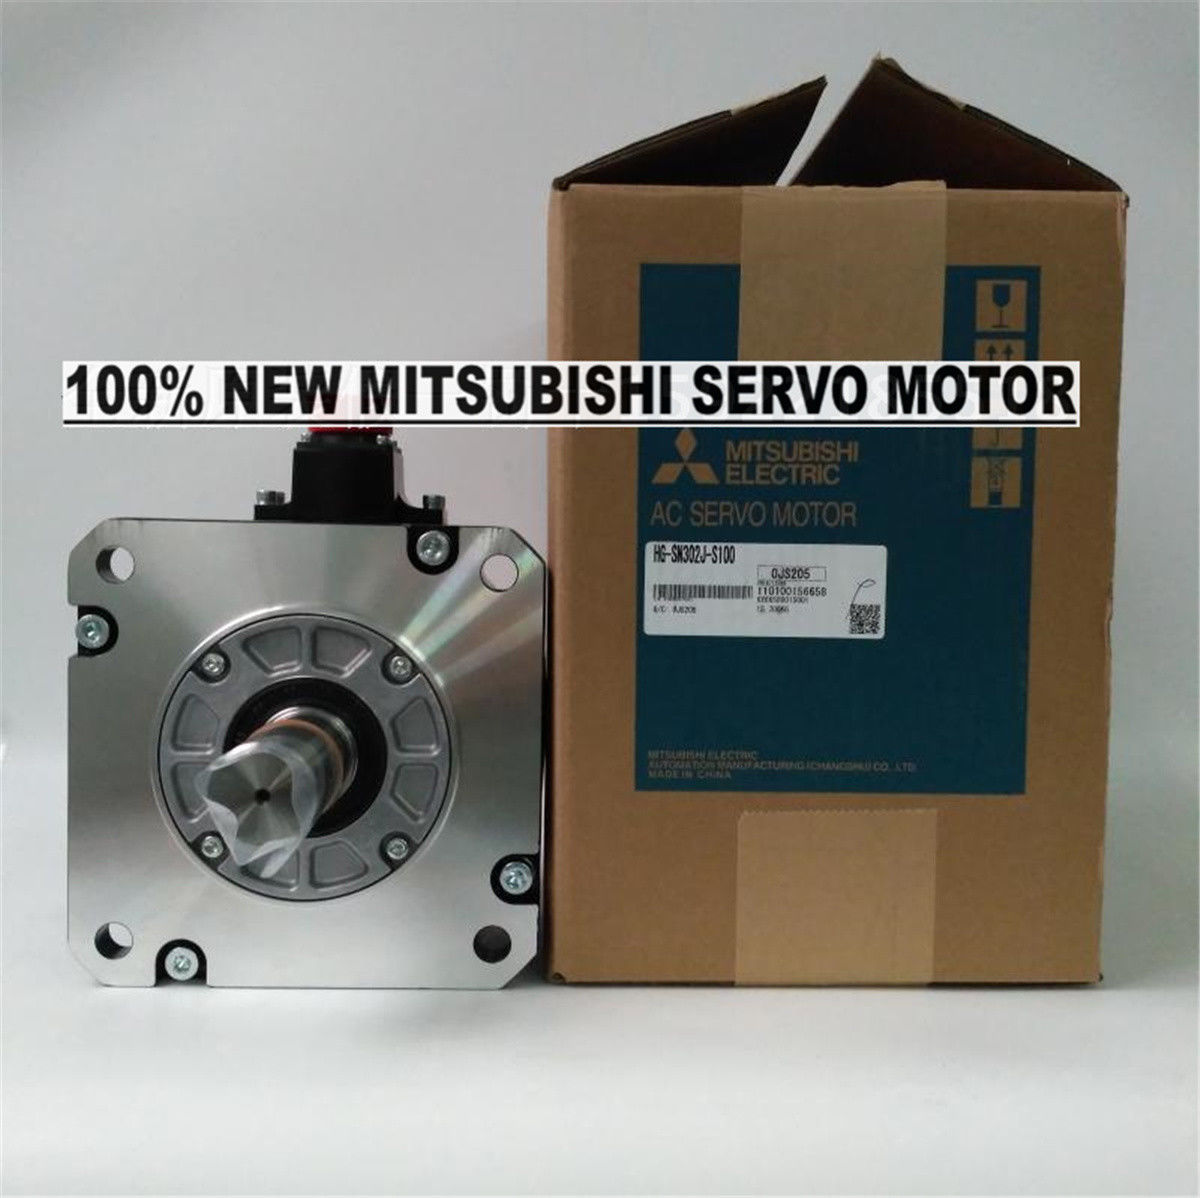 Brand NEW Mitsubishi Servo Motor HG-SN302J-S100 in box HGSN302JS100